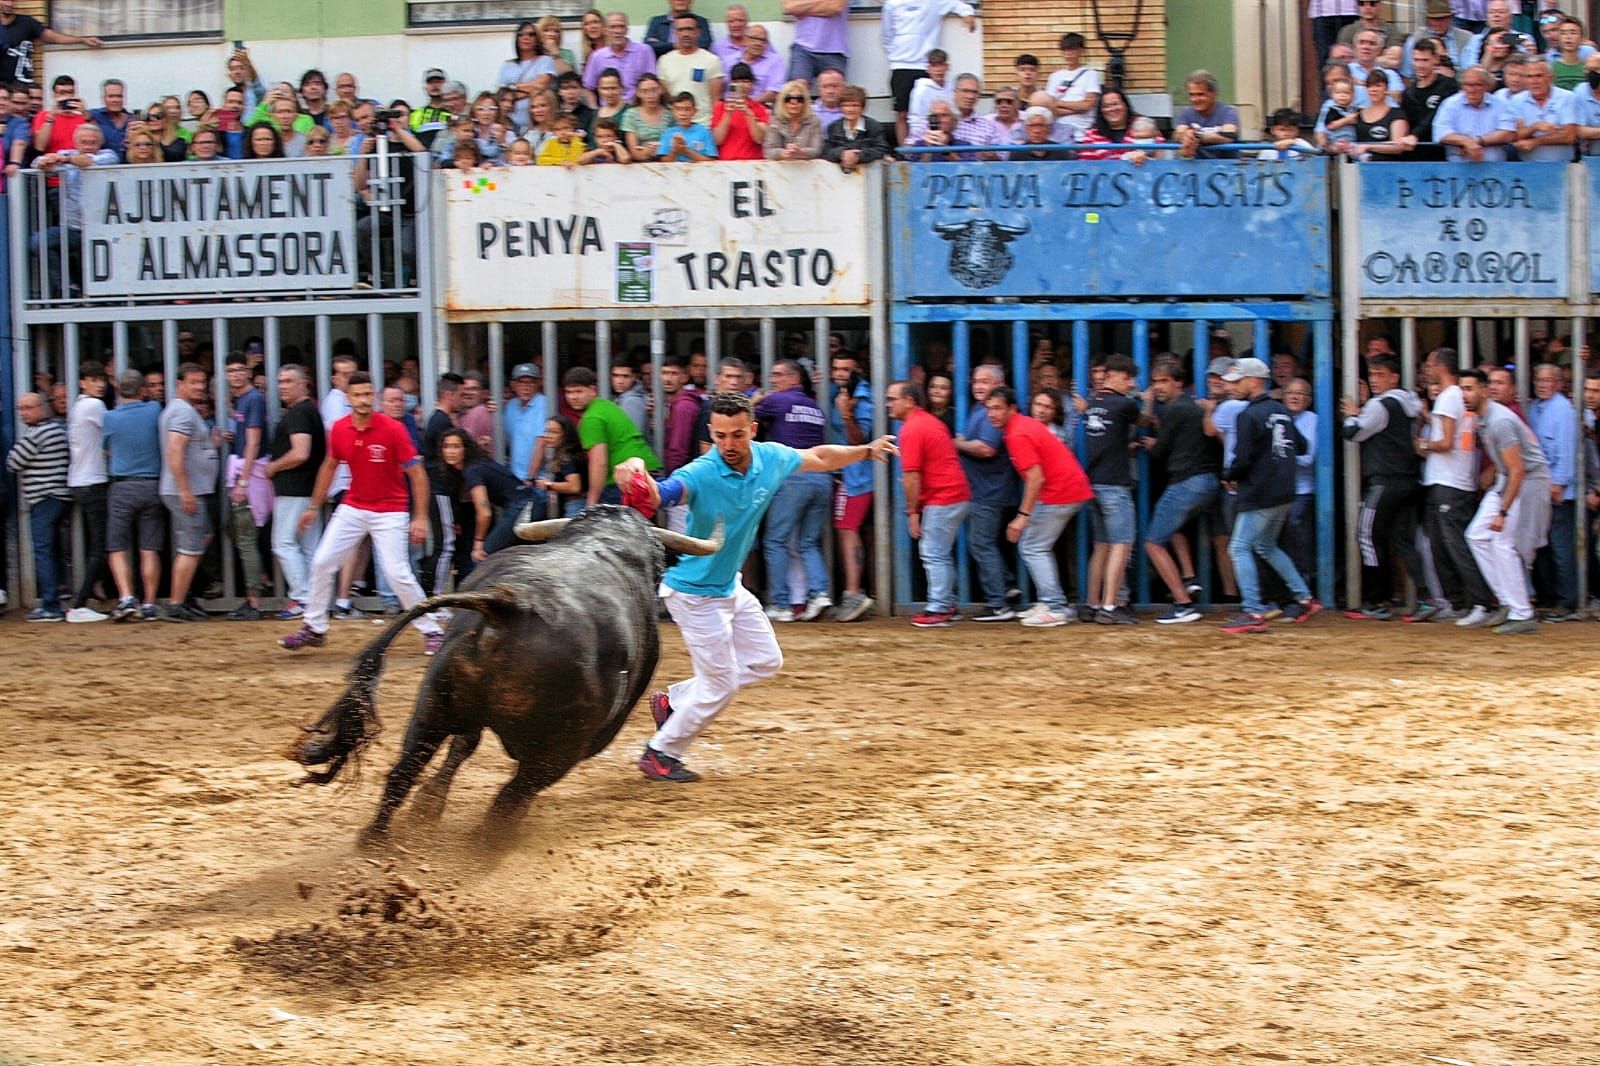 Las mejores imágenes de la jornada de toros del miércoles en Almassora